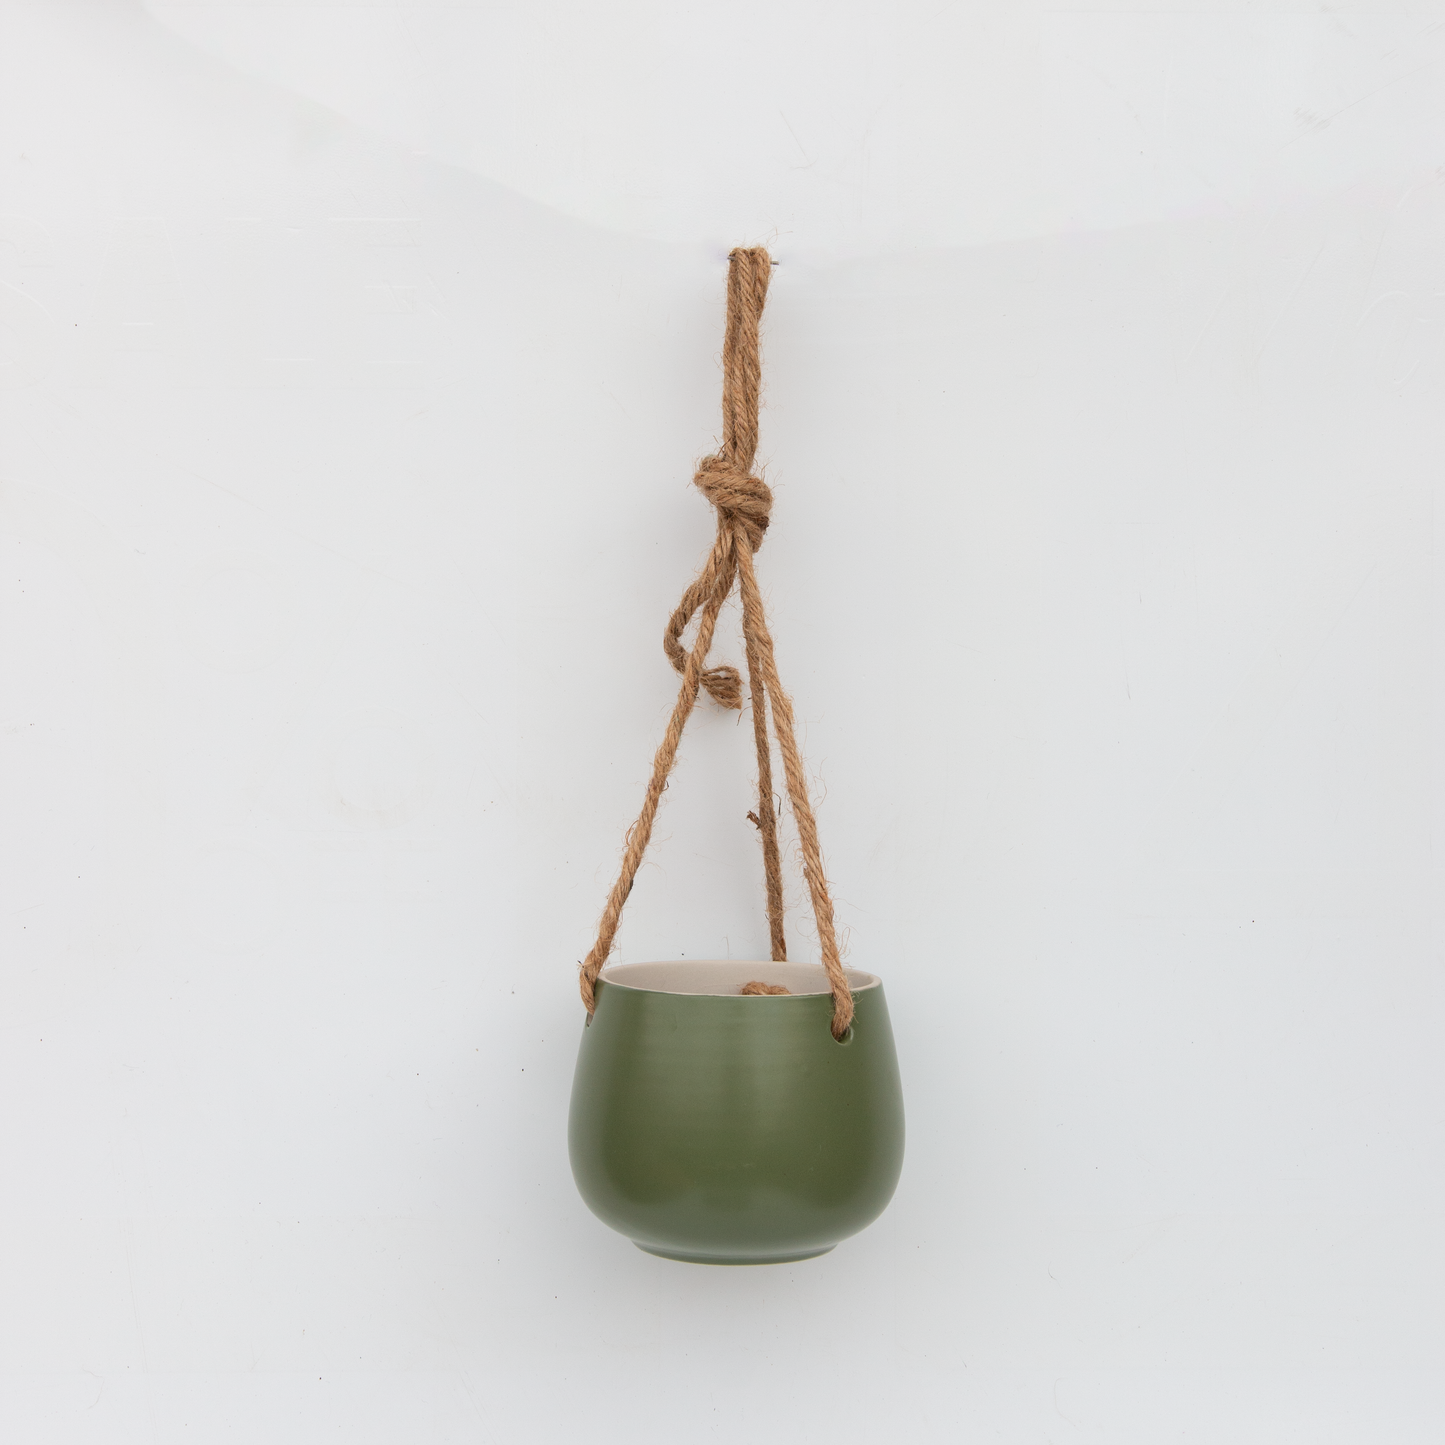 1x Ceramic Hanging Pot - Assorted Colours & Sizes